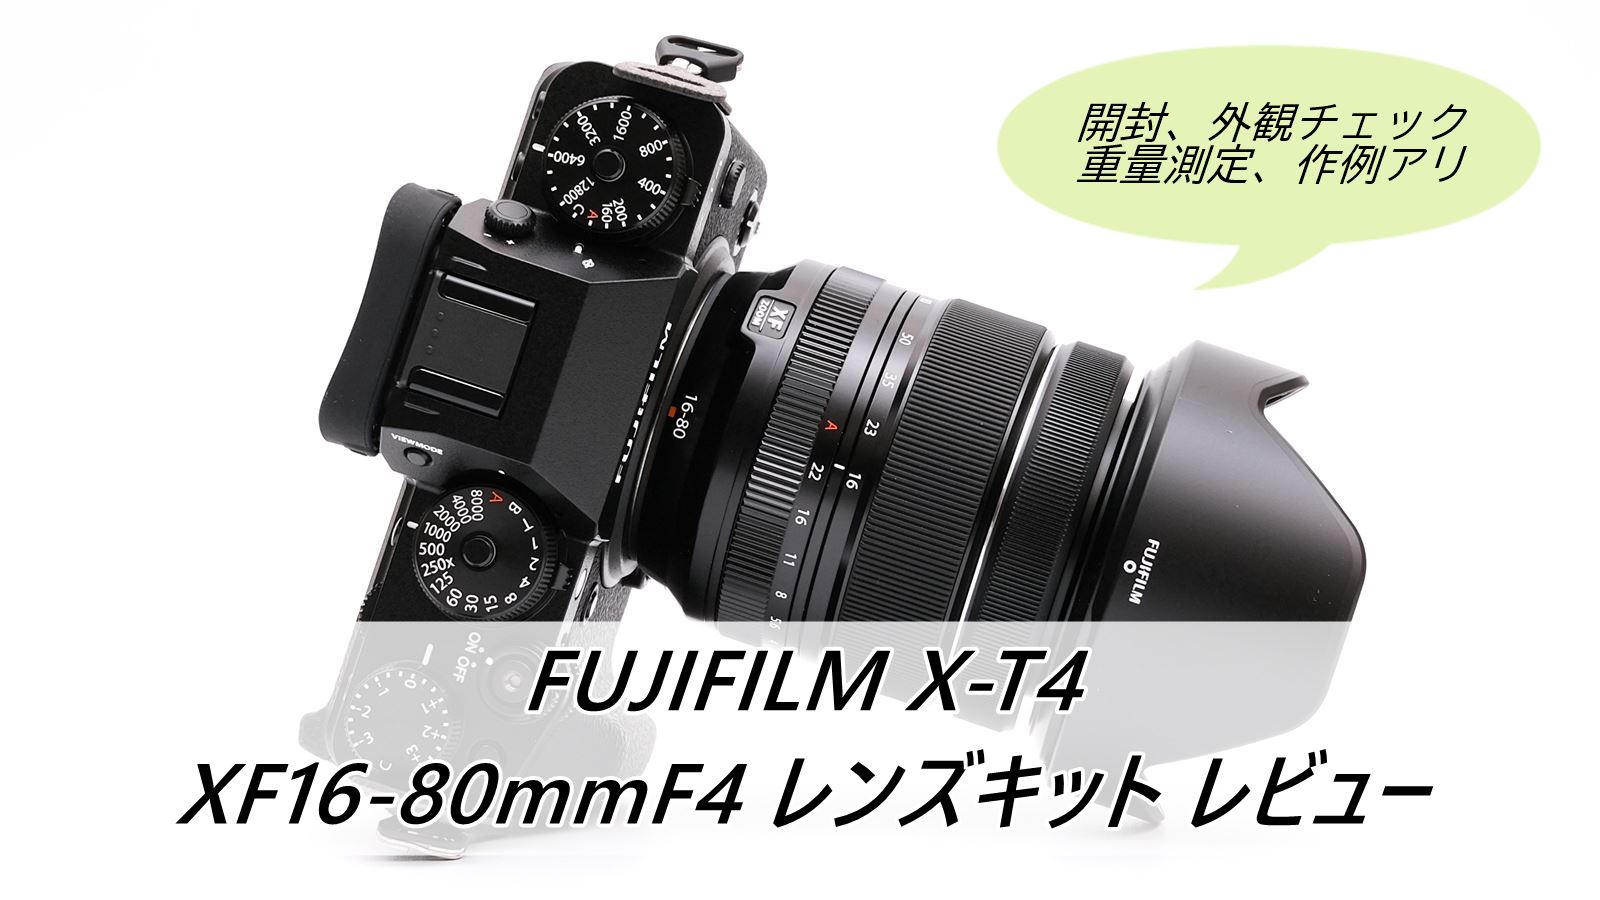 FUJIFILM X-T4 XF16-80mmF4 レンズキット レビュー 最高のデザインと 